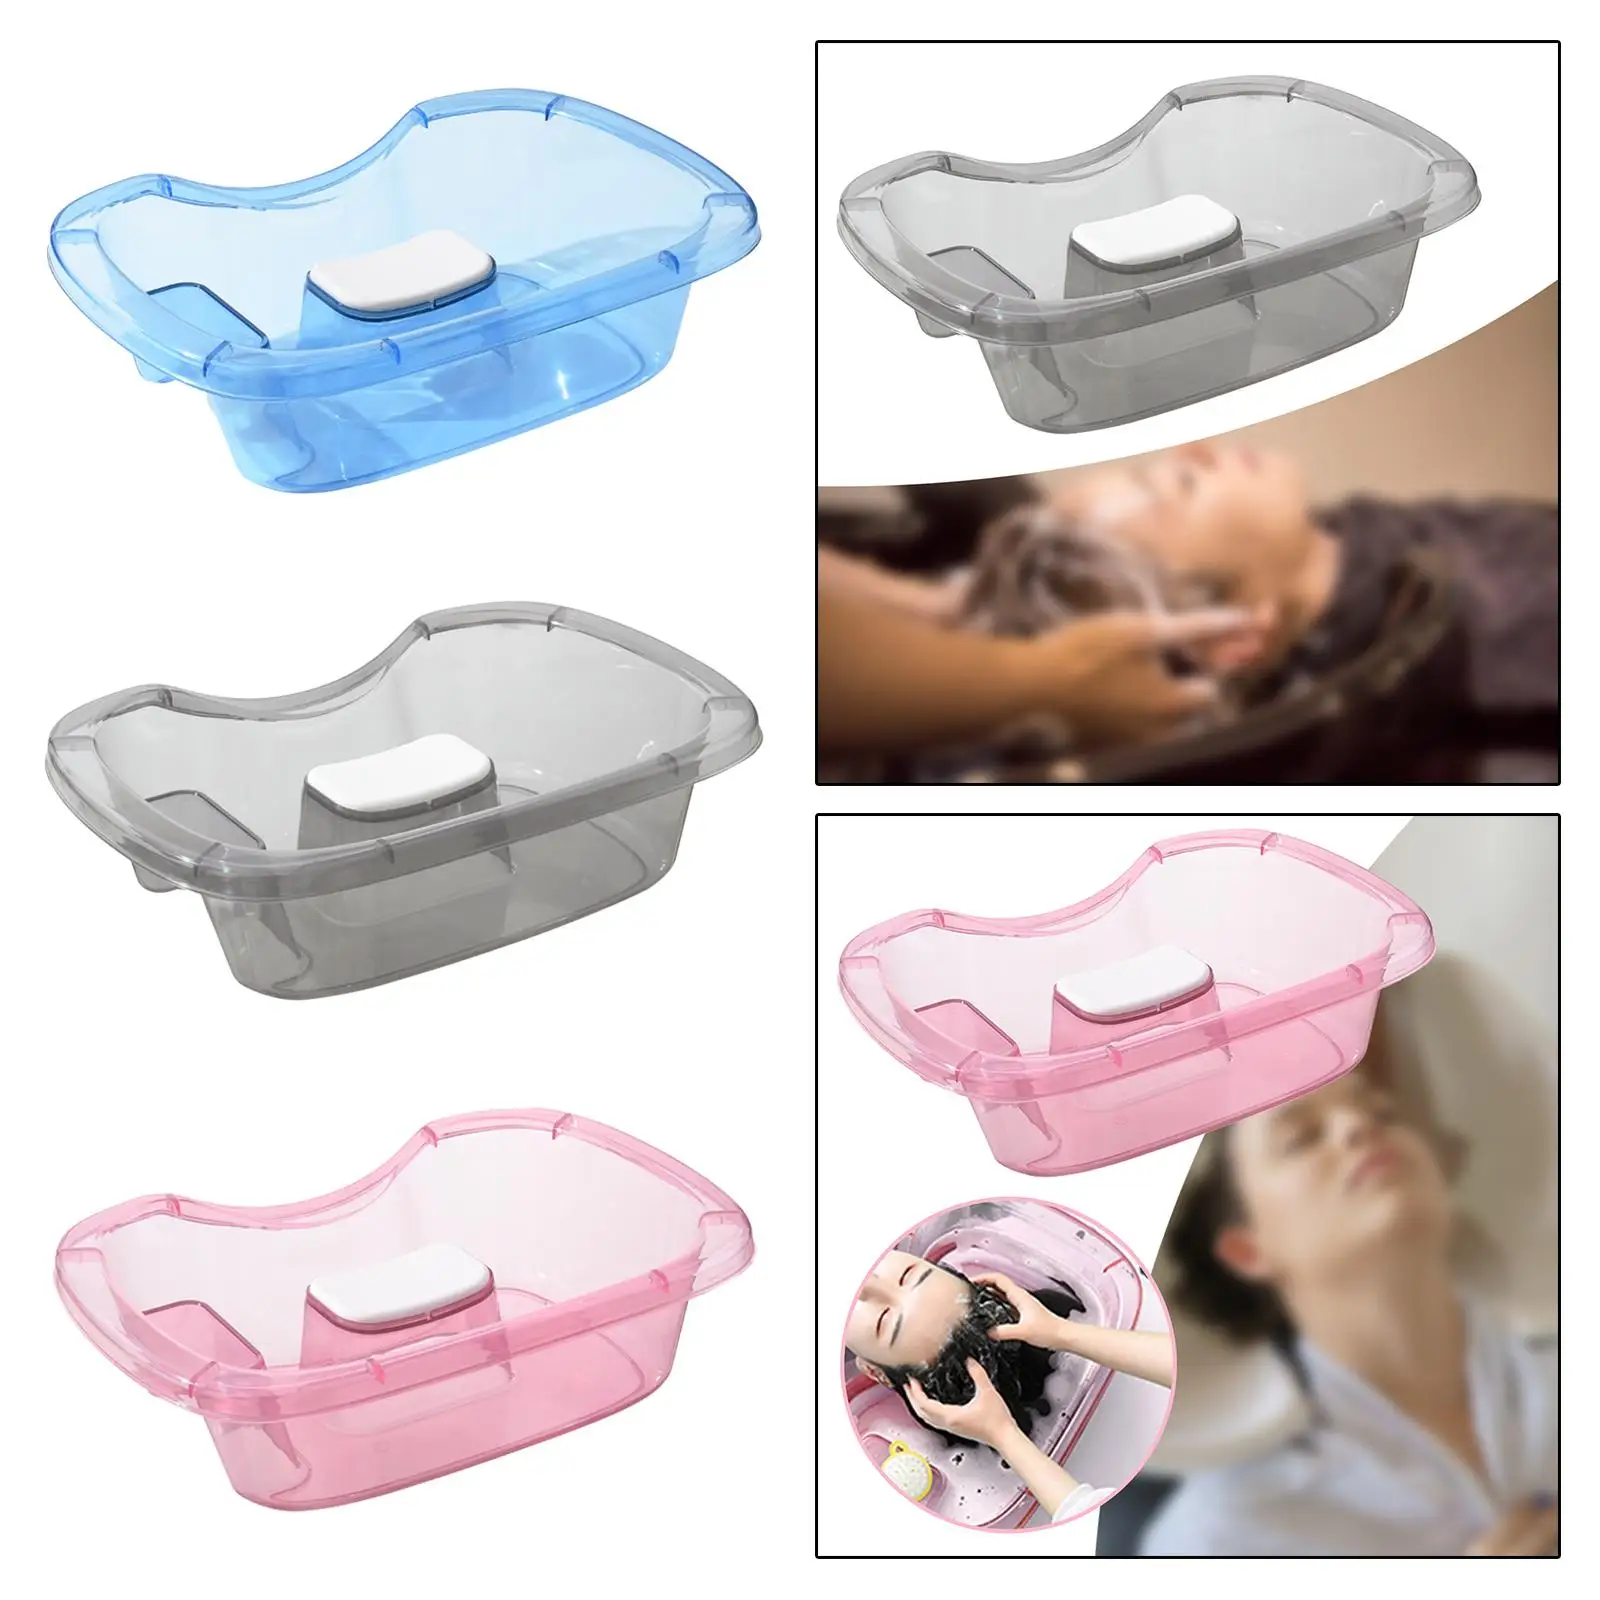 Shampoo Basin Hair Wash Tub Hair Washing Tray Mobile Shampoo Basin Shampoo Bowl for Kids Bedside Injured Disabled Seniors